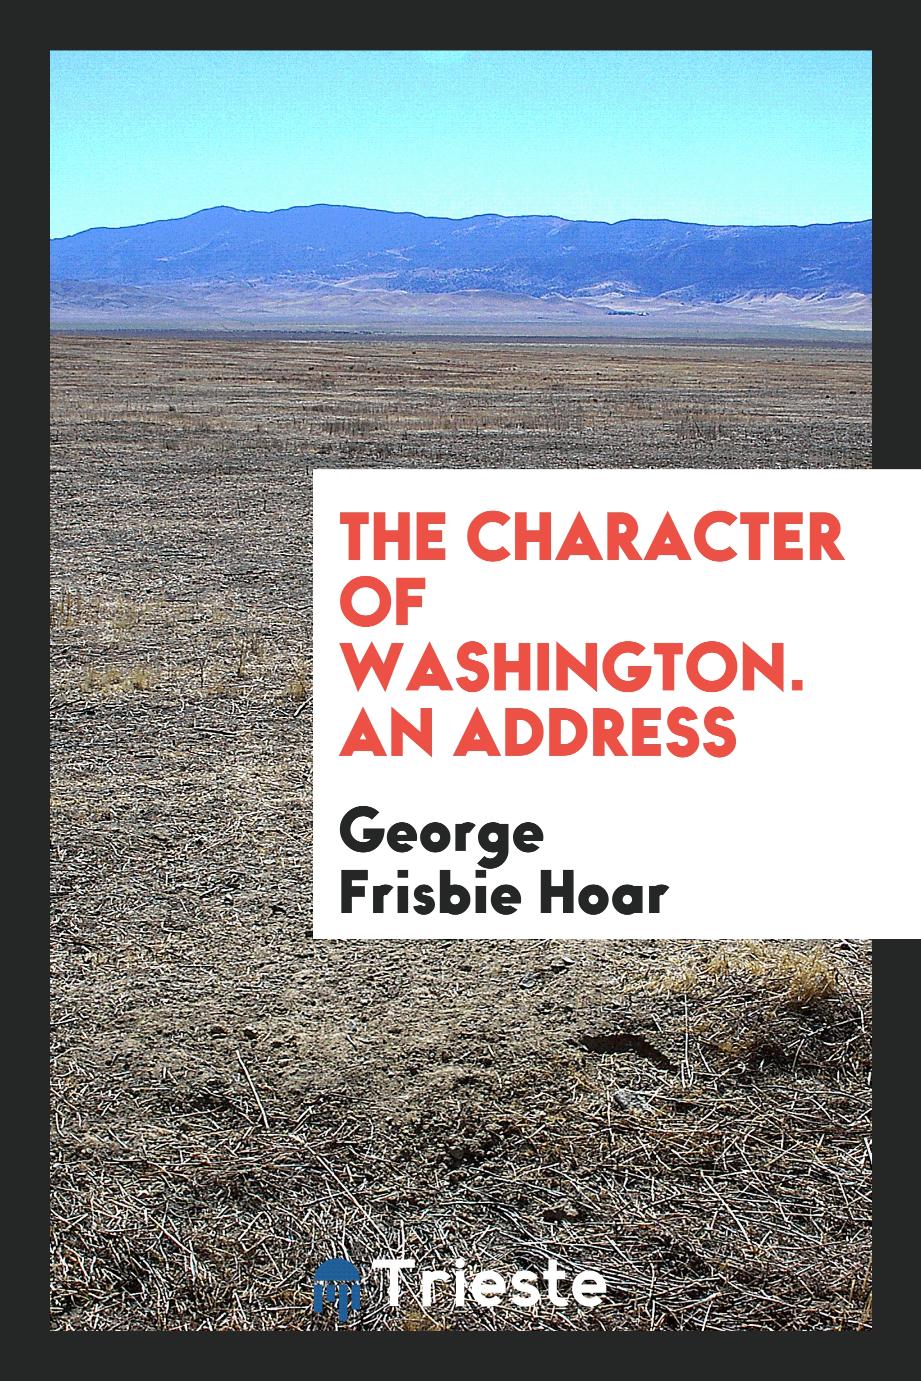 The character of Washington. An address